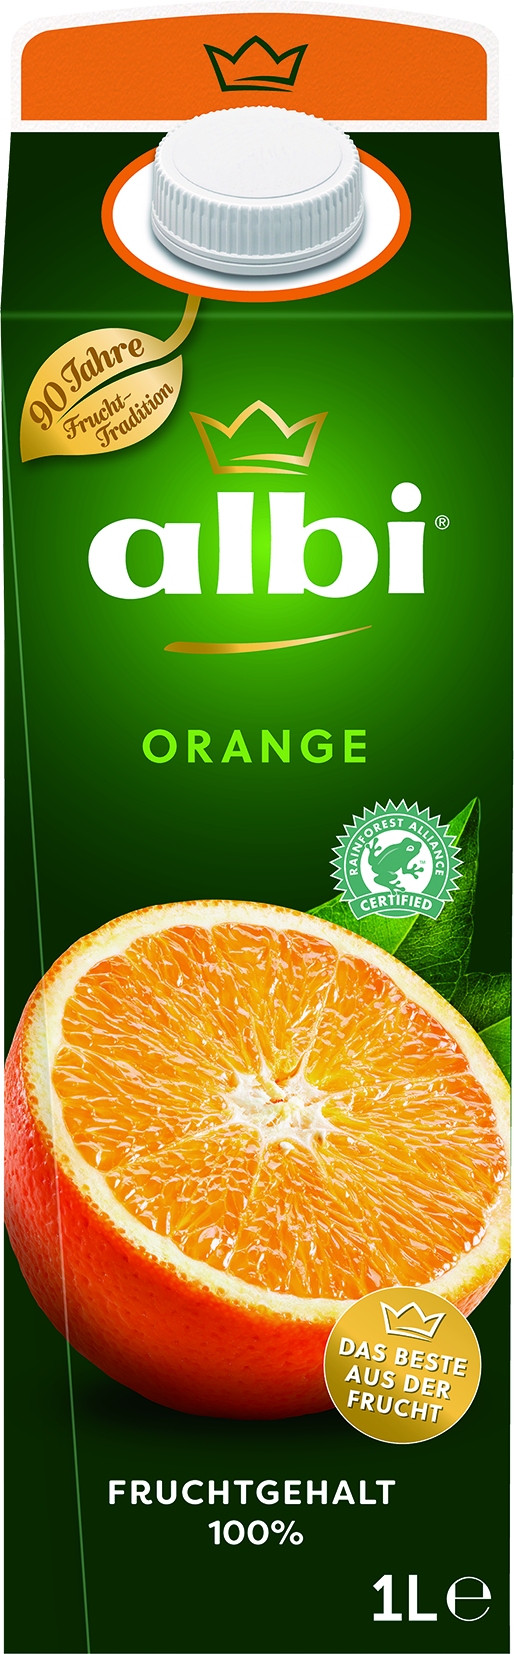 Orange juice   